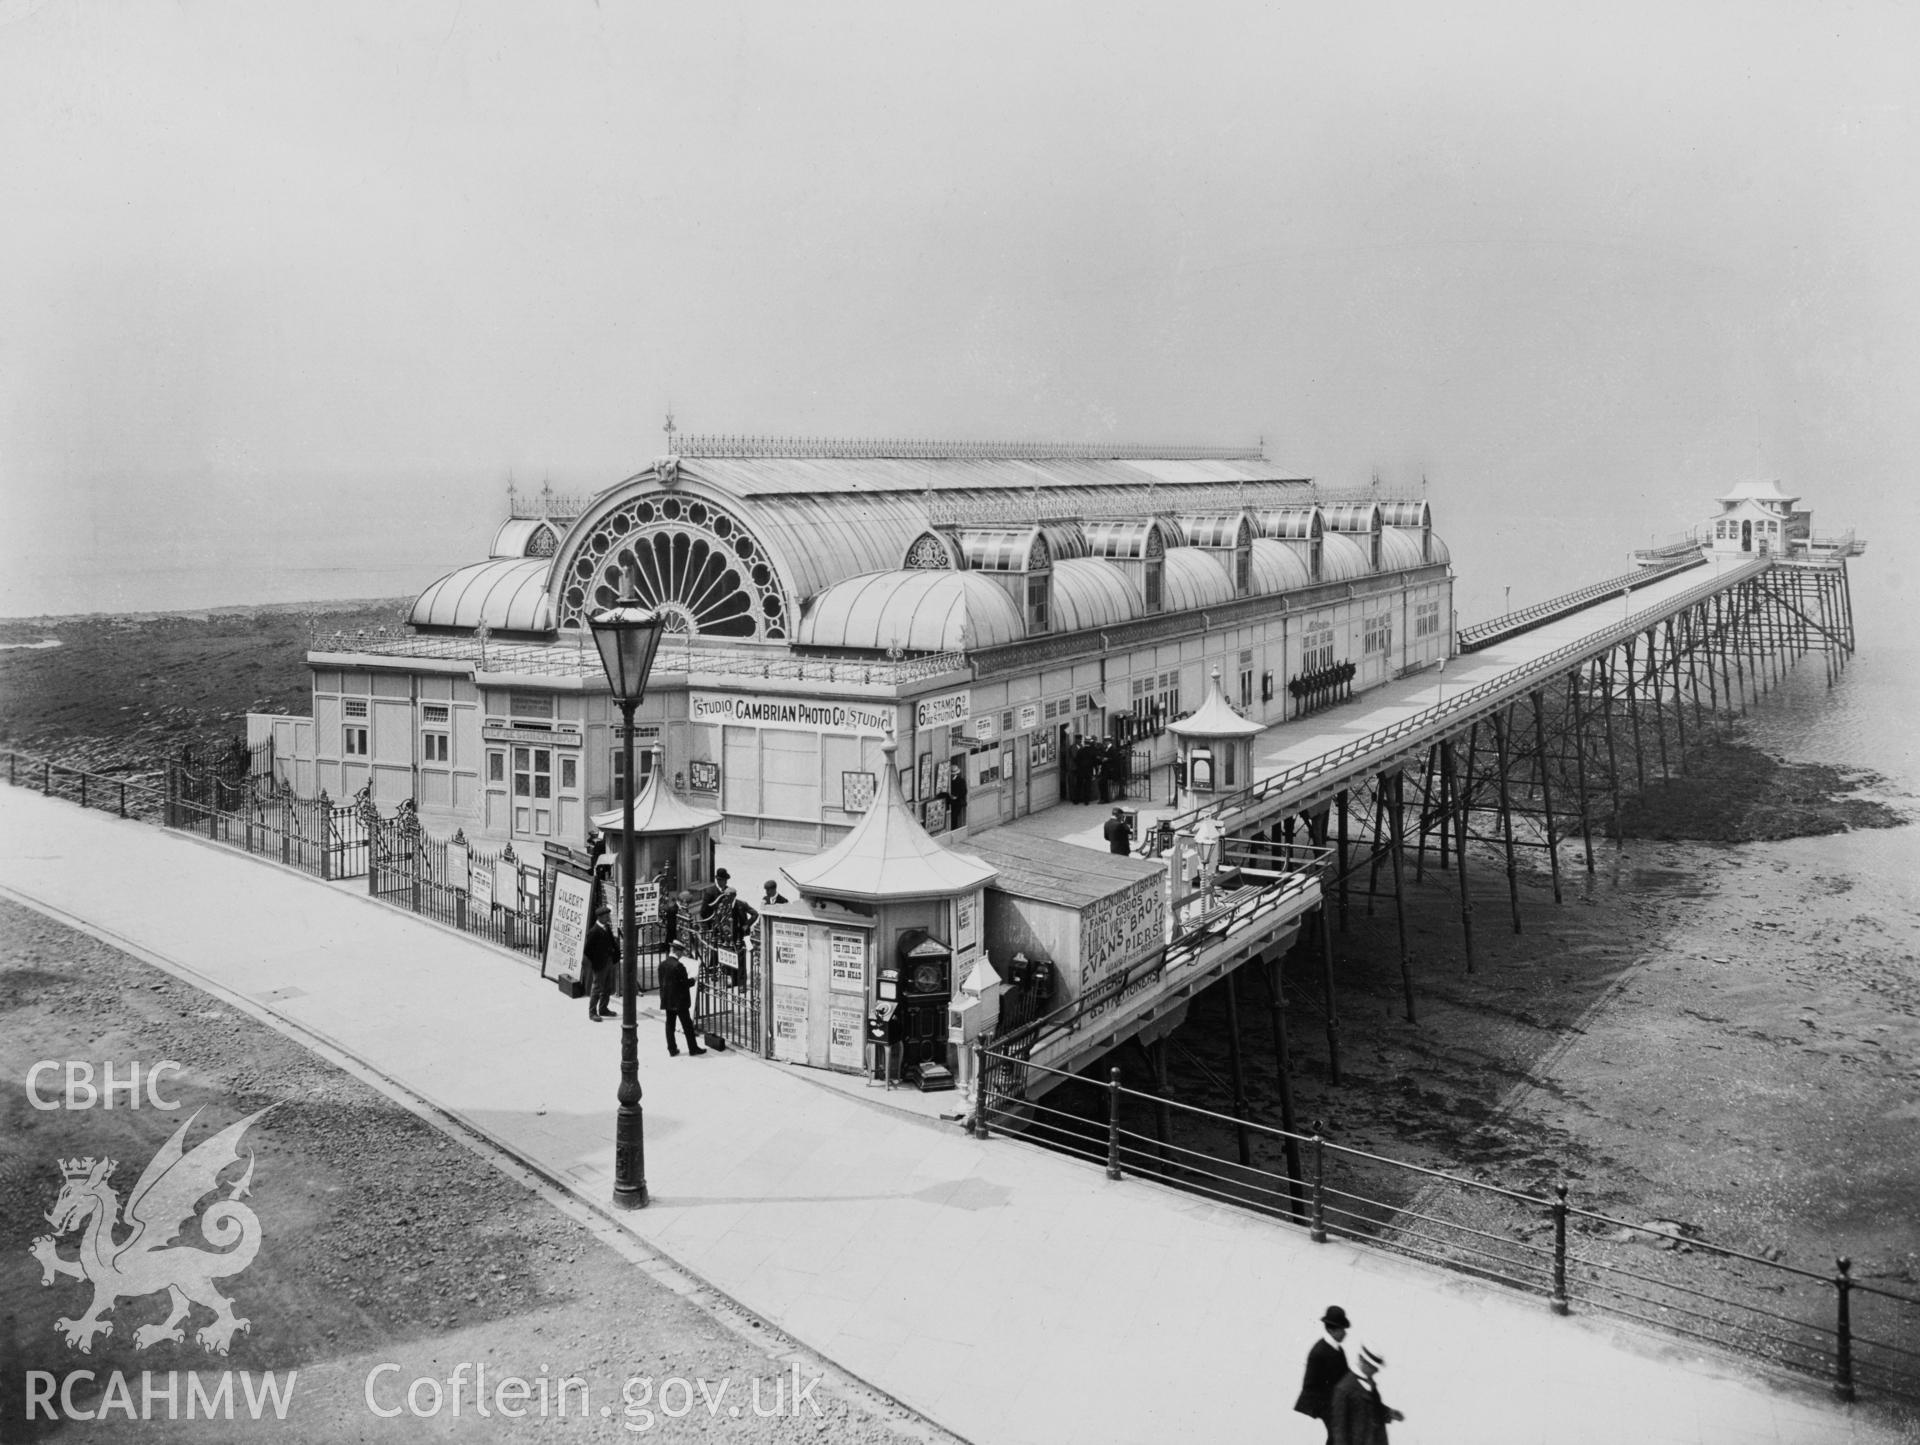 Undated albumen print of Aberystwyth Pavilion and Pier taken by James Ede, copy negative held.